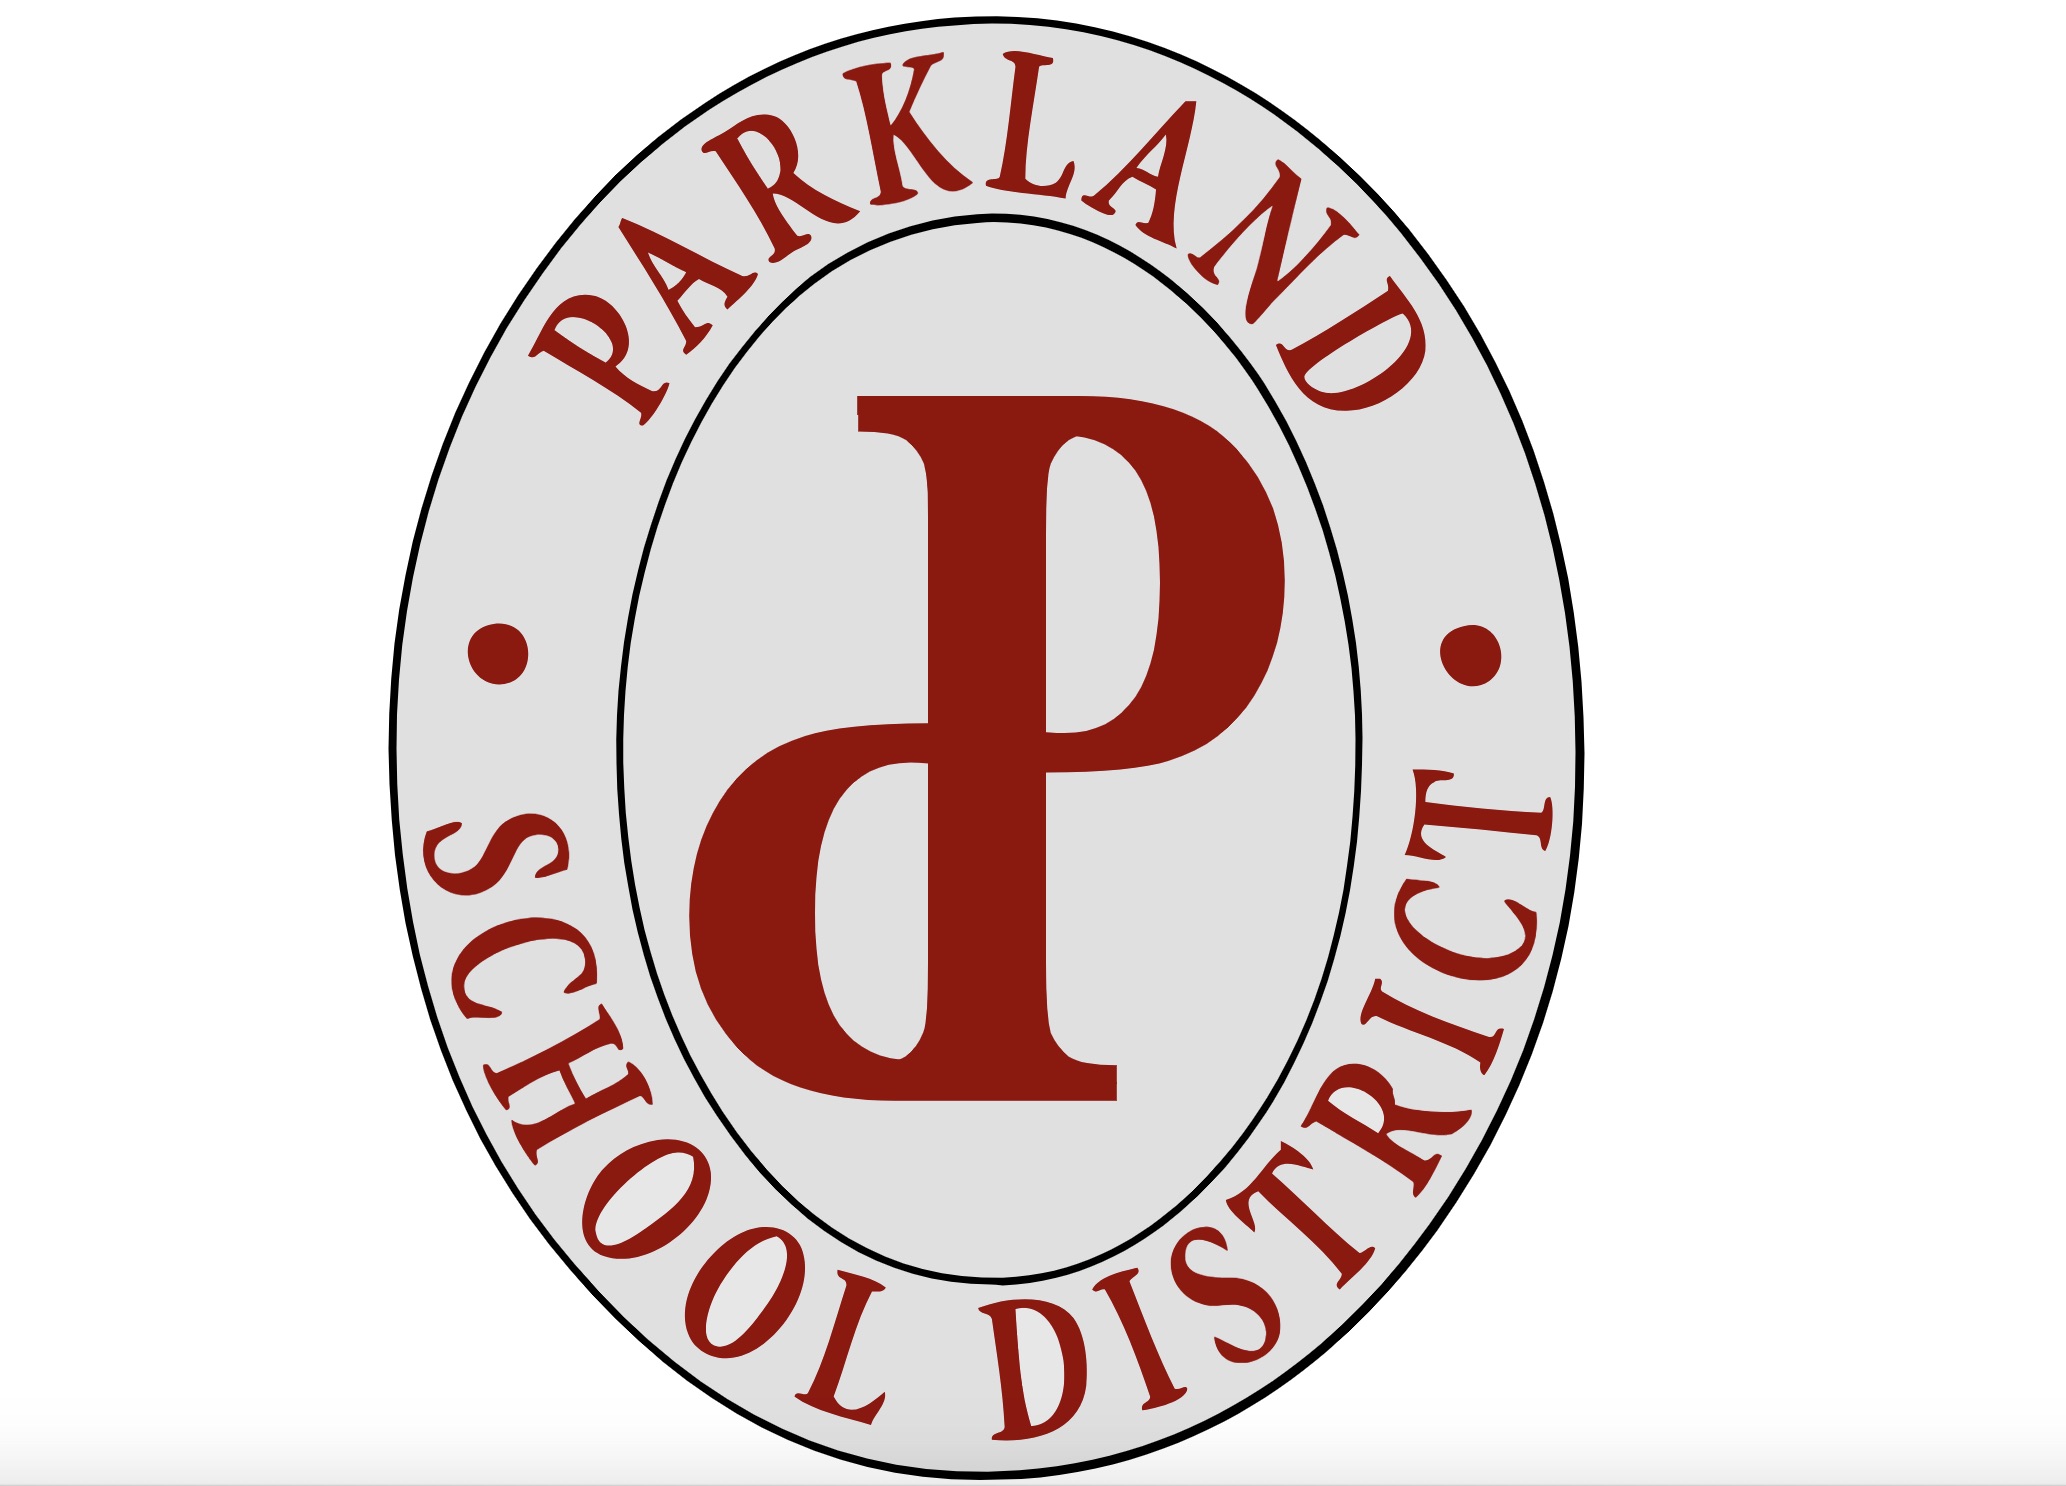 Parkland High School